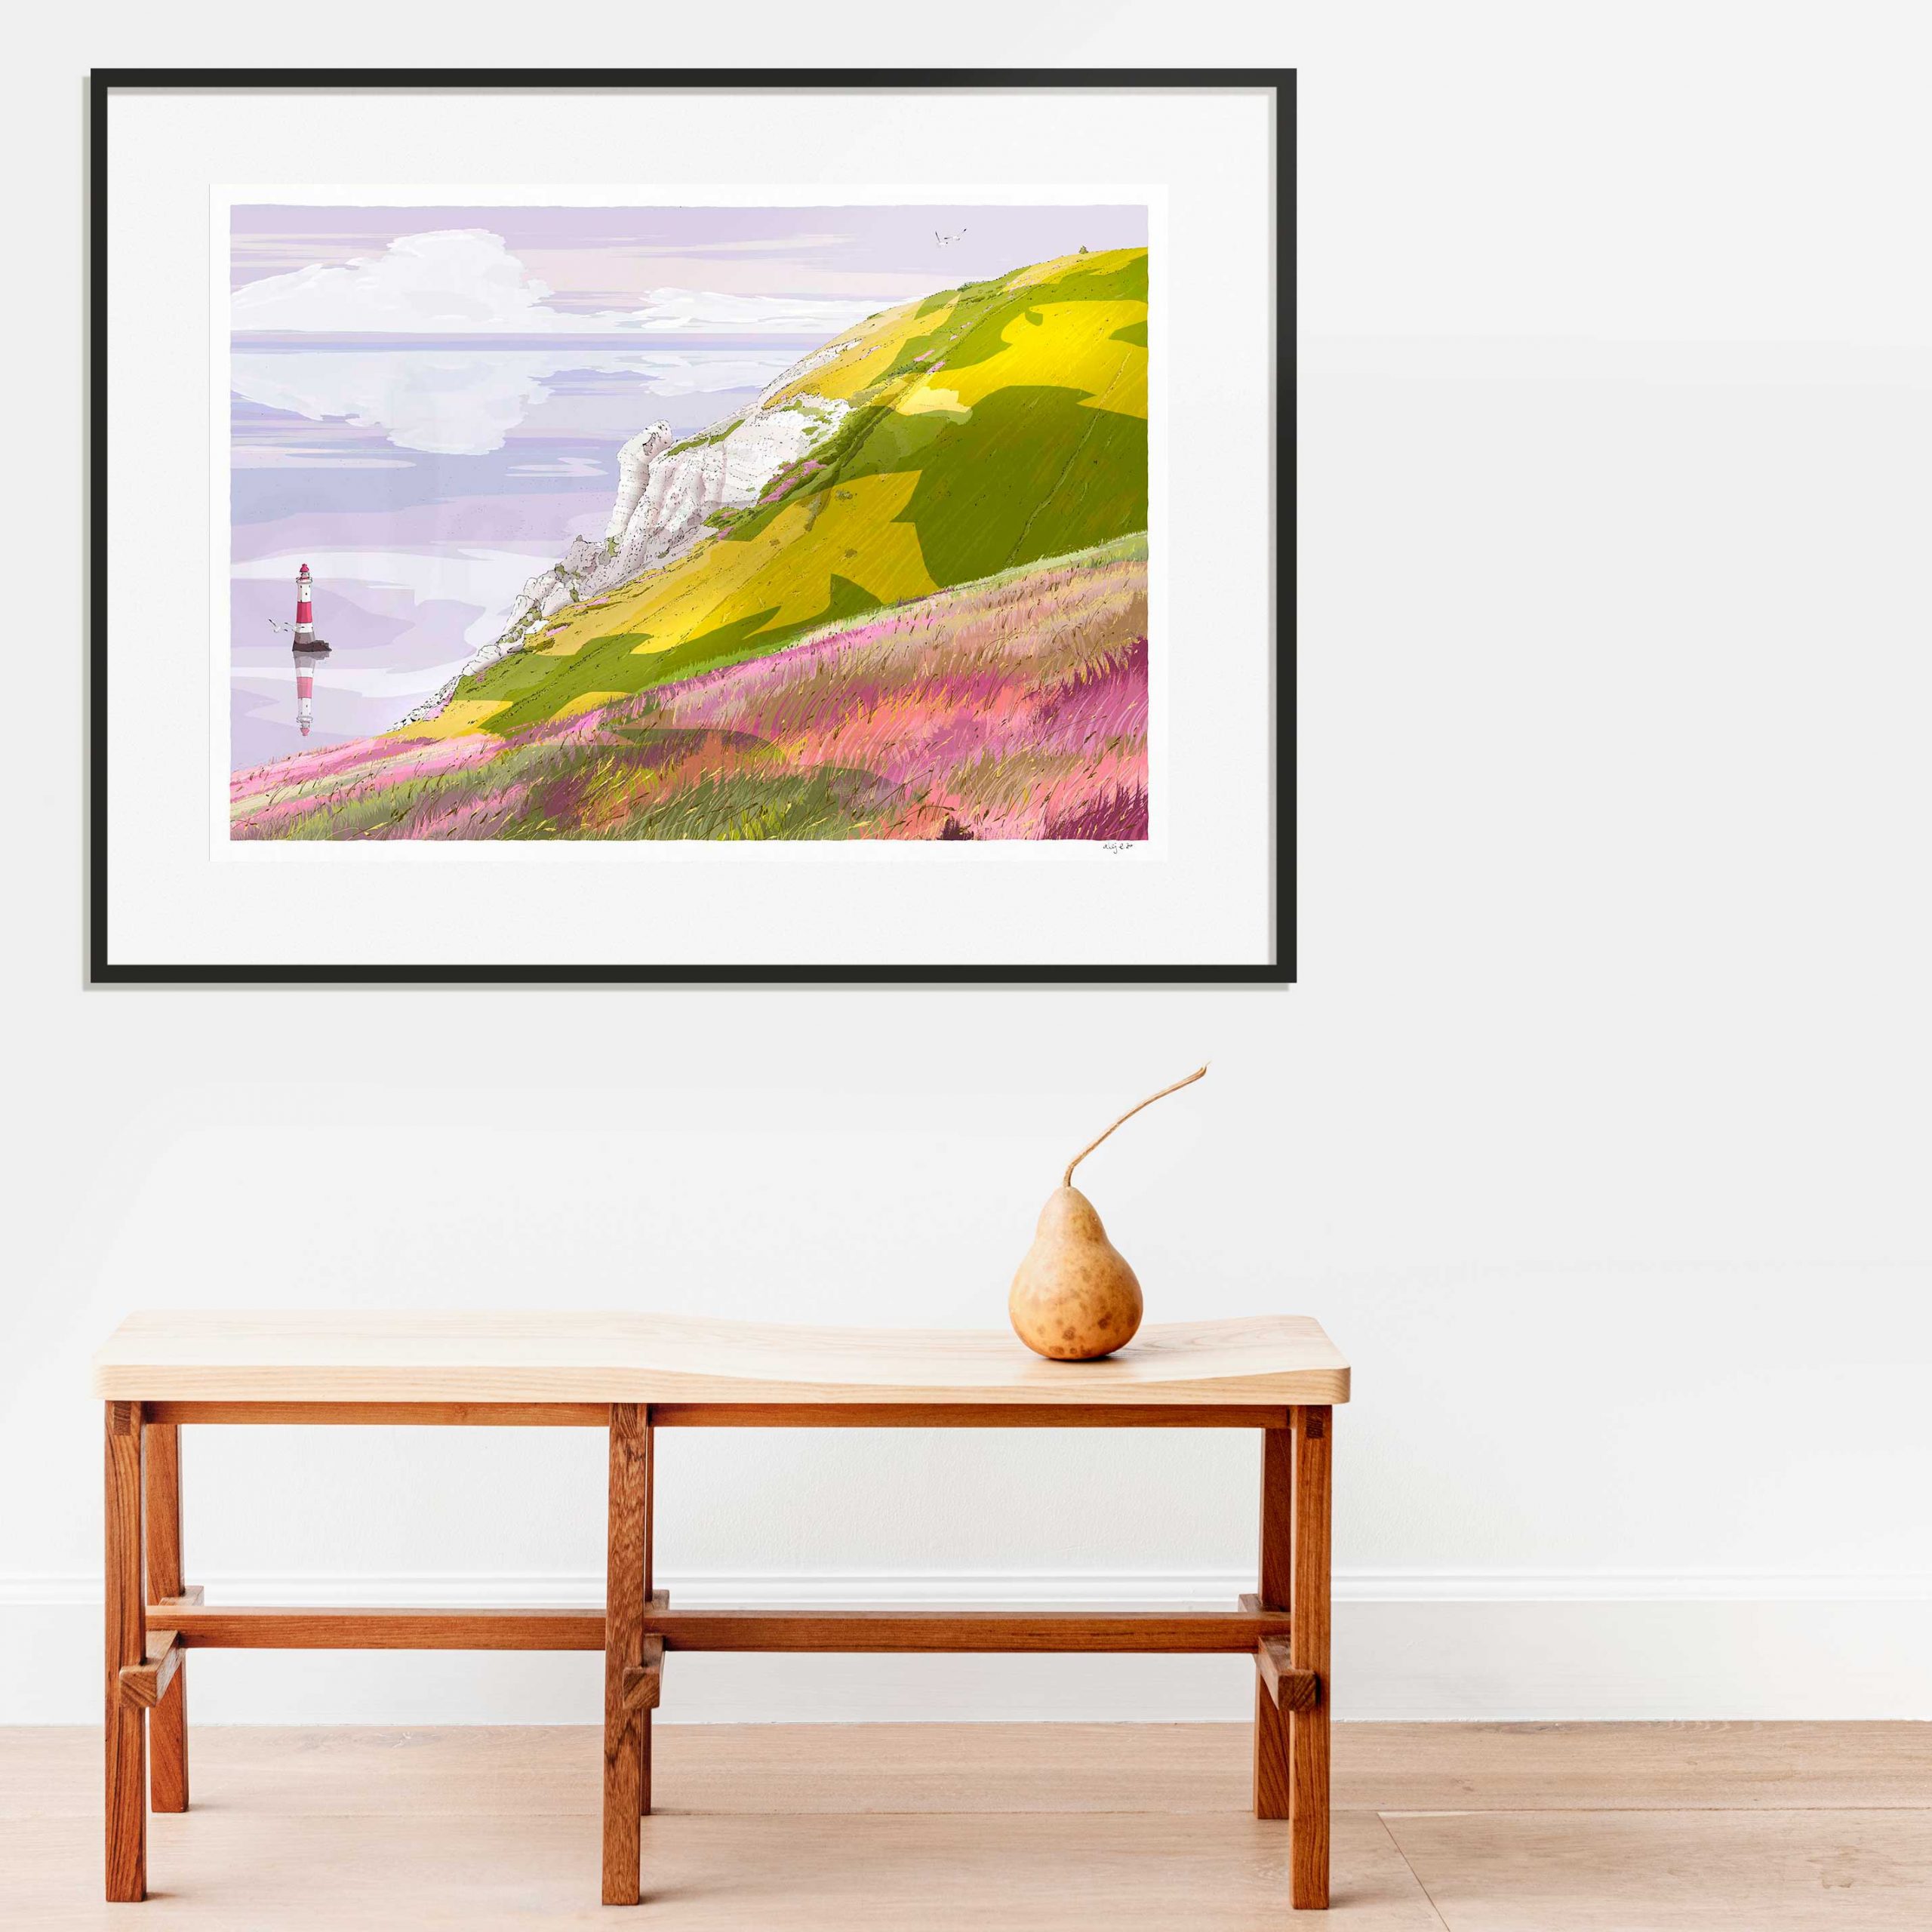 Framed limited edition art print by artist alej ez titled Beachy Head Lighthouse White Cliffs Lavender Sea East